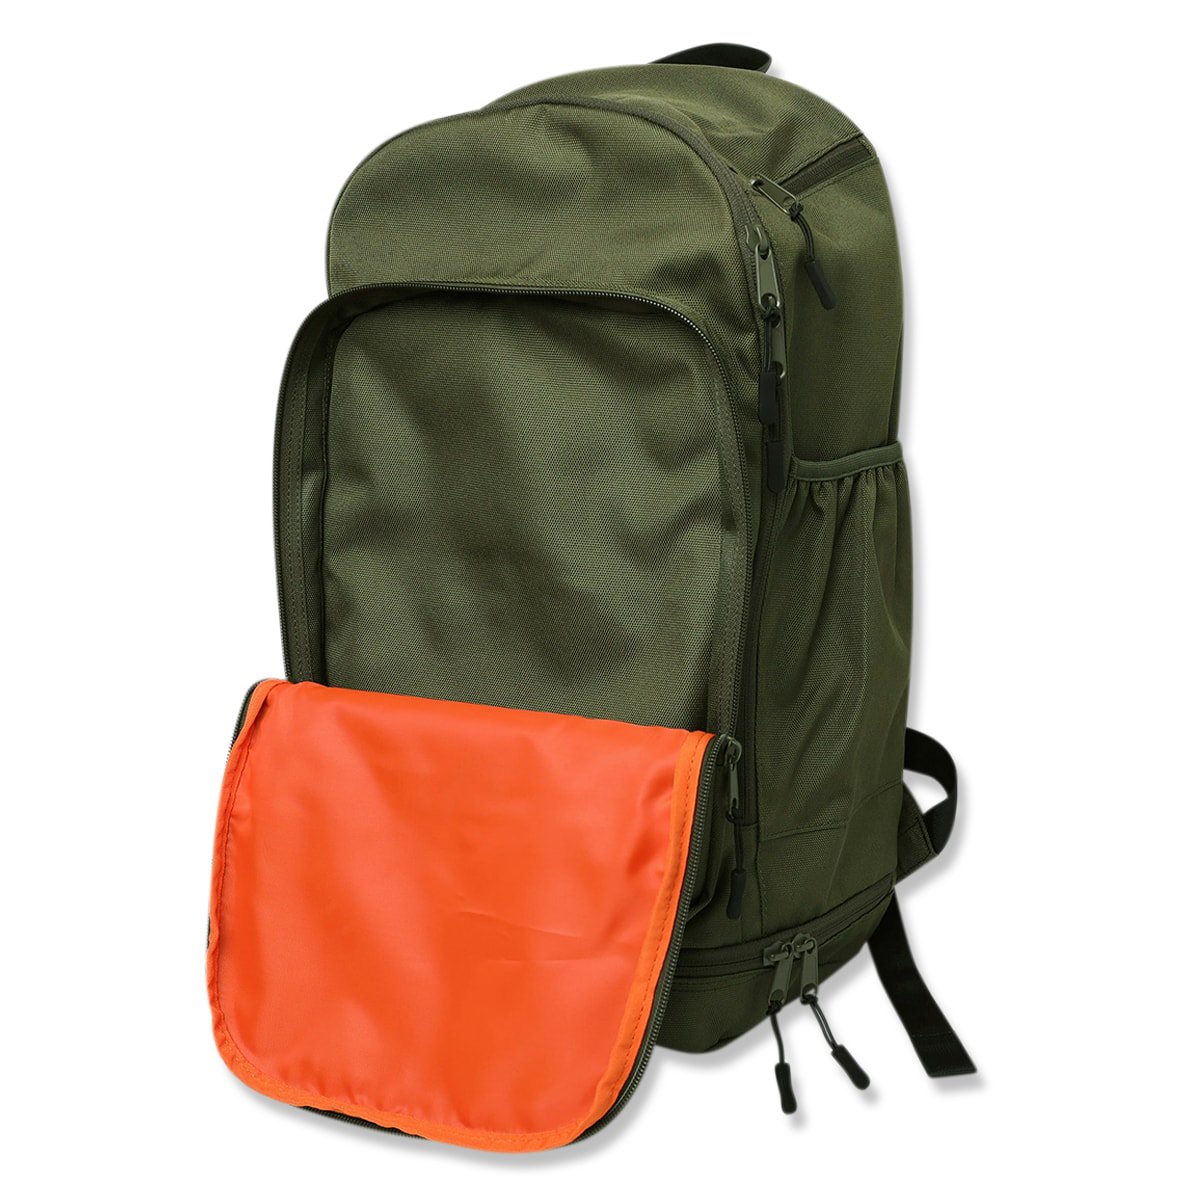 workout backpack 2.0【khaki/orange】 - Arch ☆ アーチ 